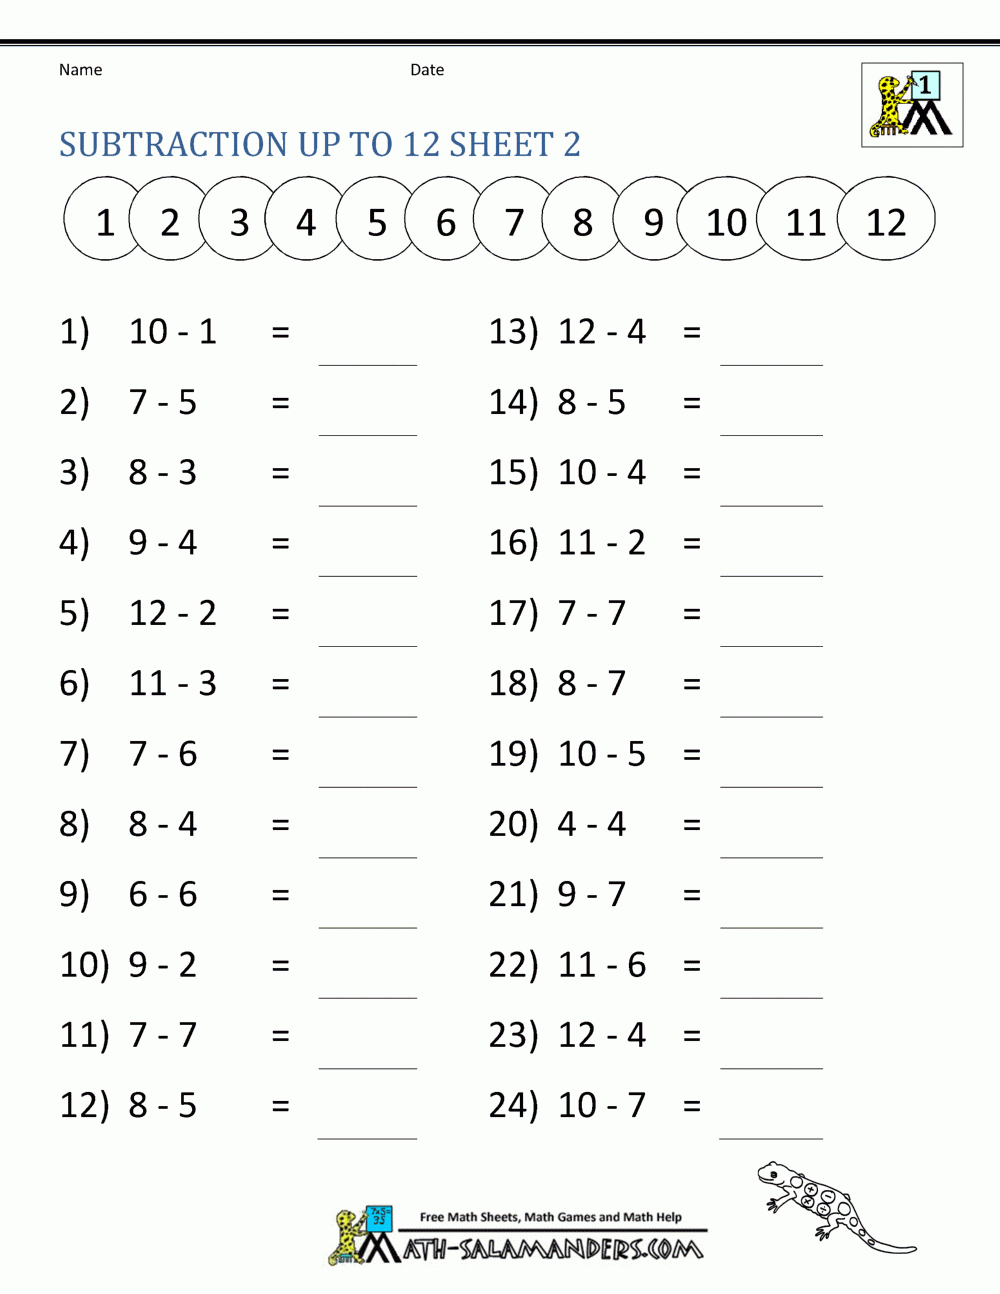 Subtraction Facts Worksheets 1St Grade regarding Free Printable Maths Worksheets KS1